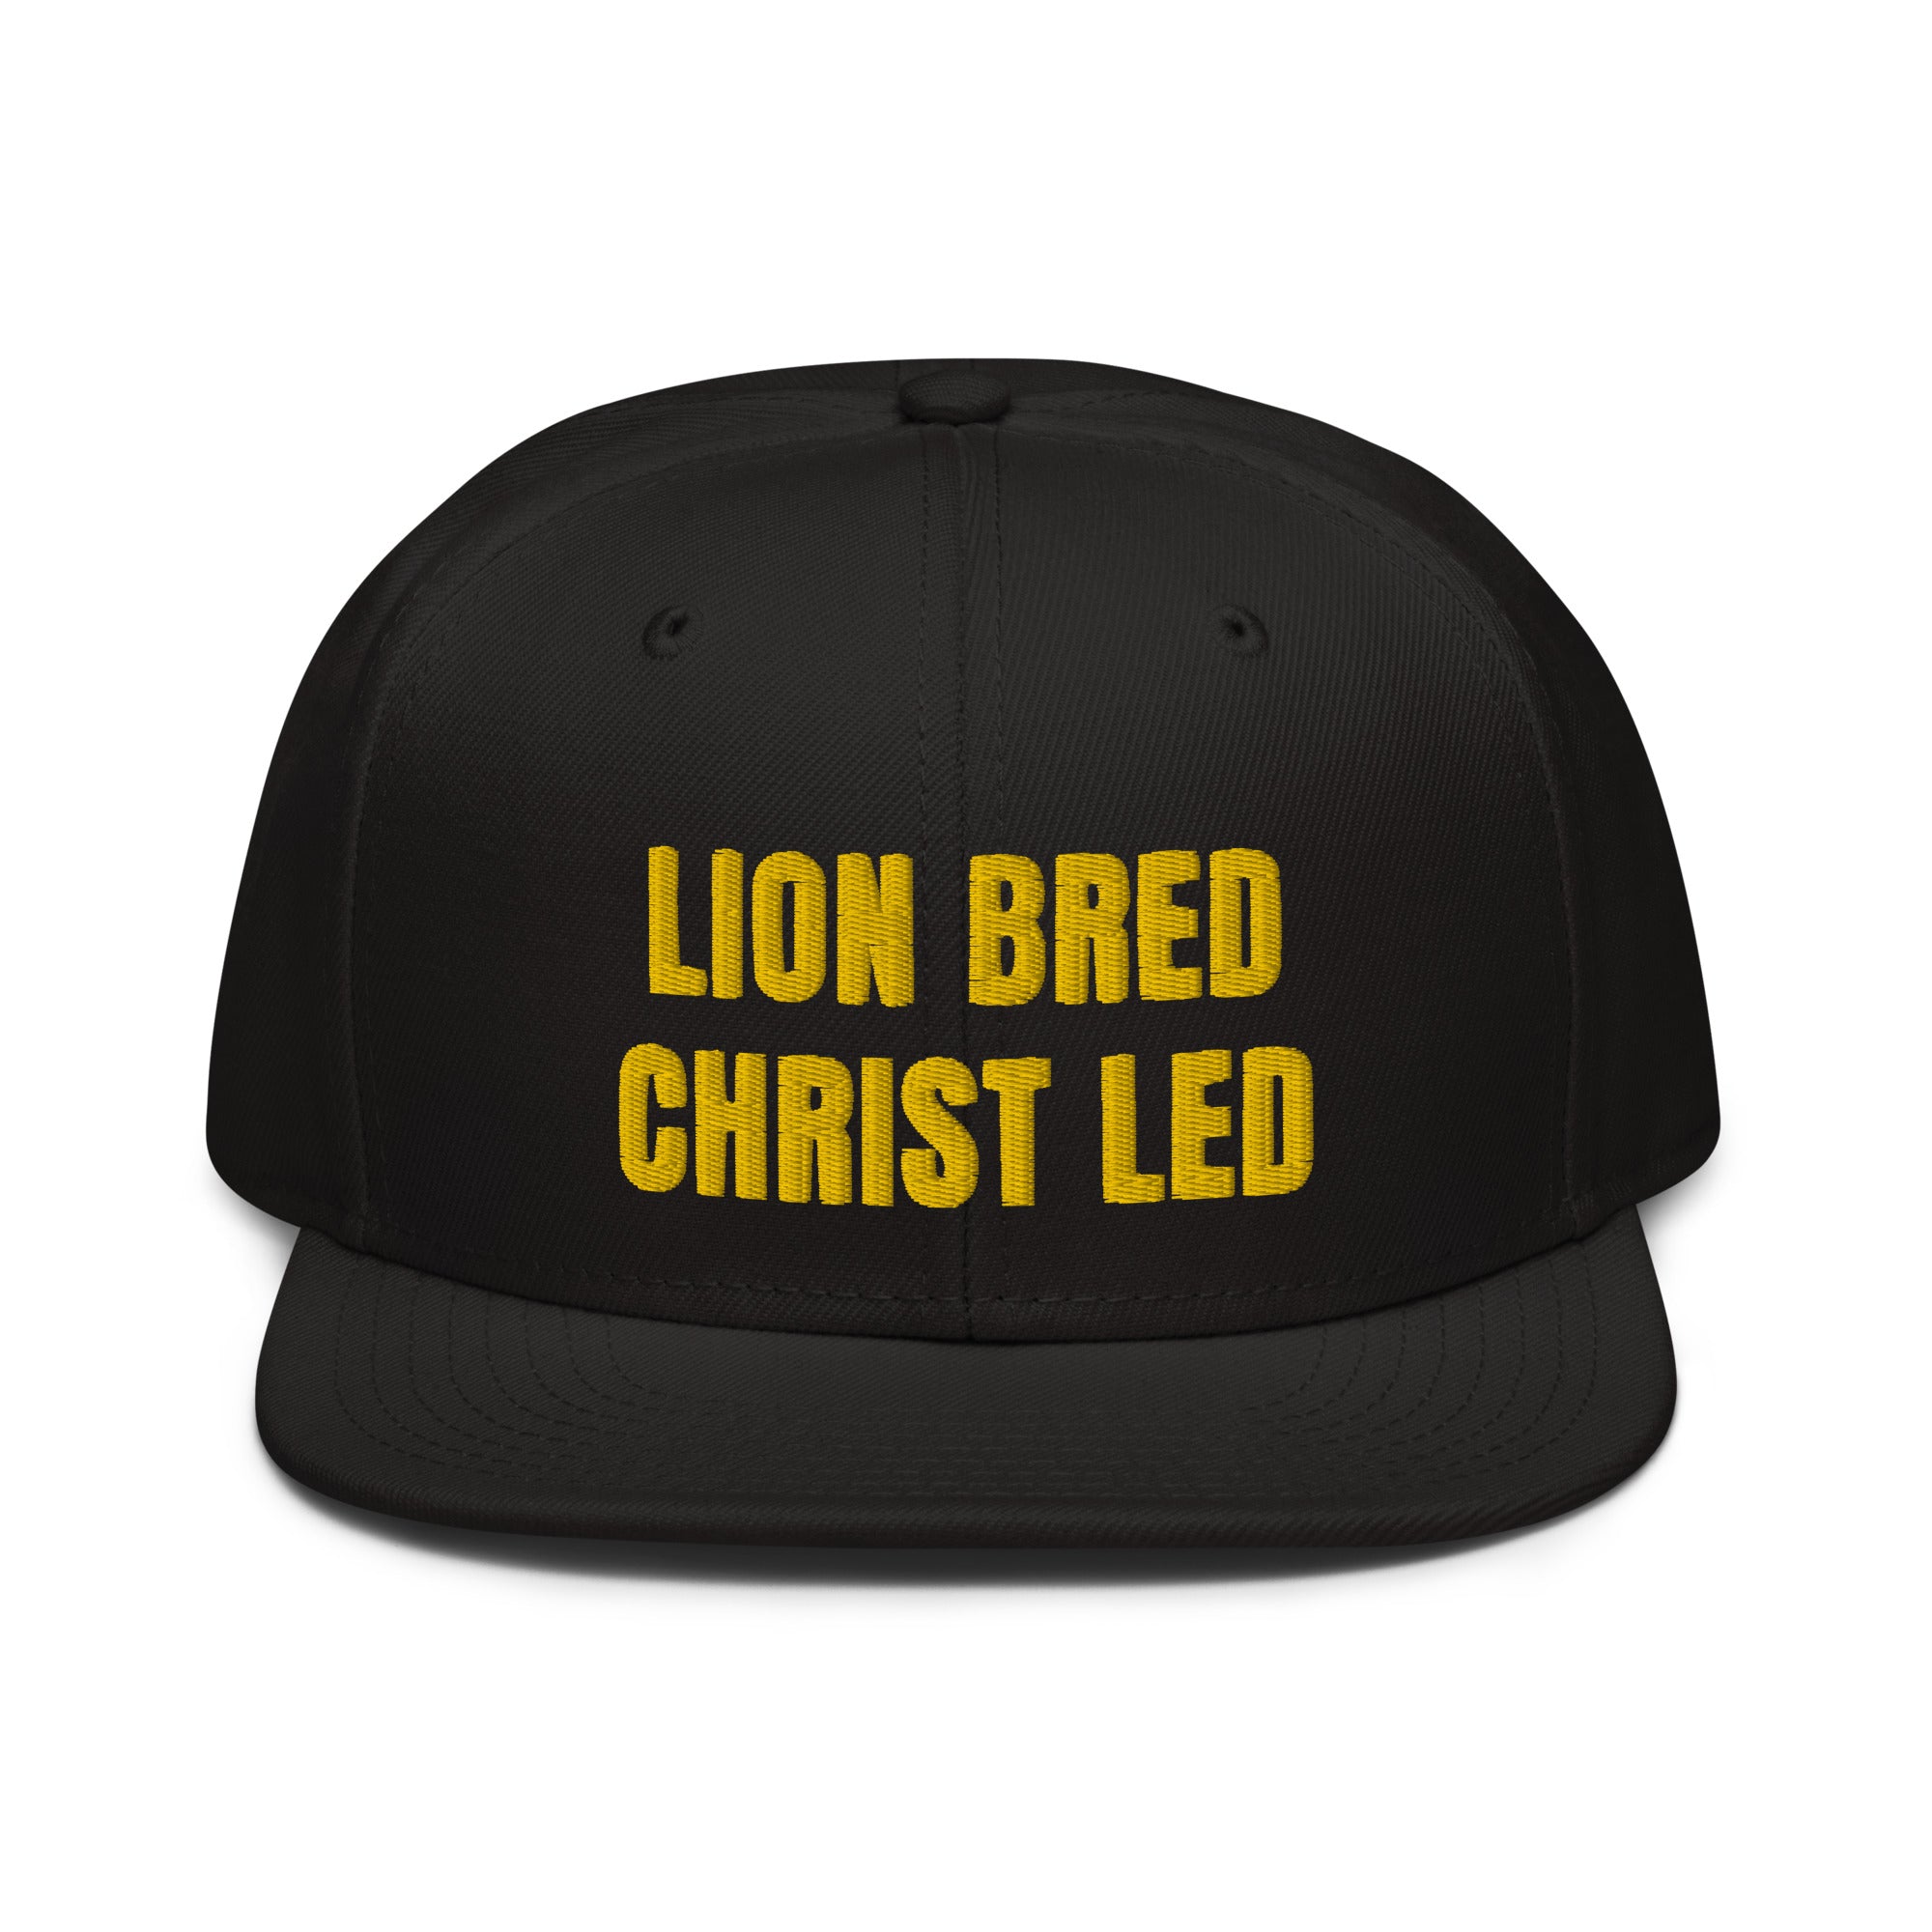 Embroidered TM 3D LION BRED Lionborn CHRIST Tees Hat Puff LED – Snapback